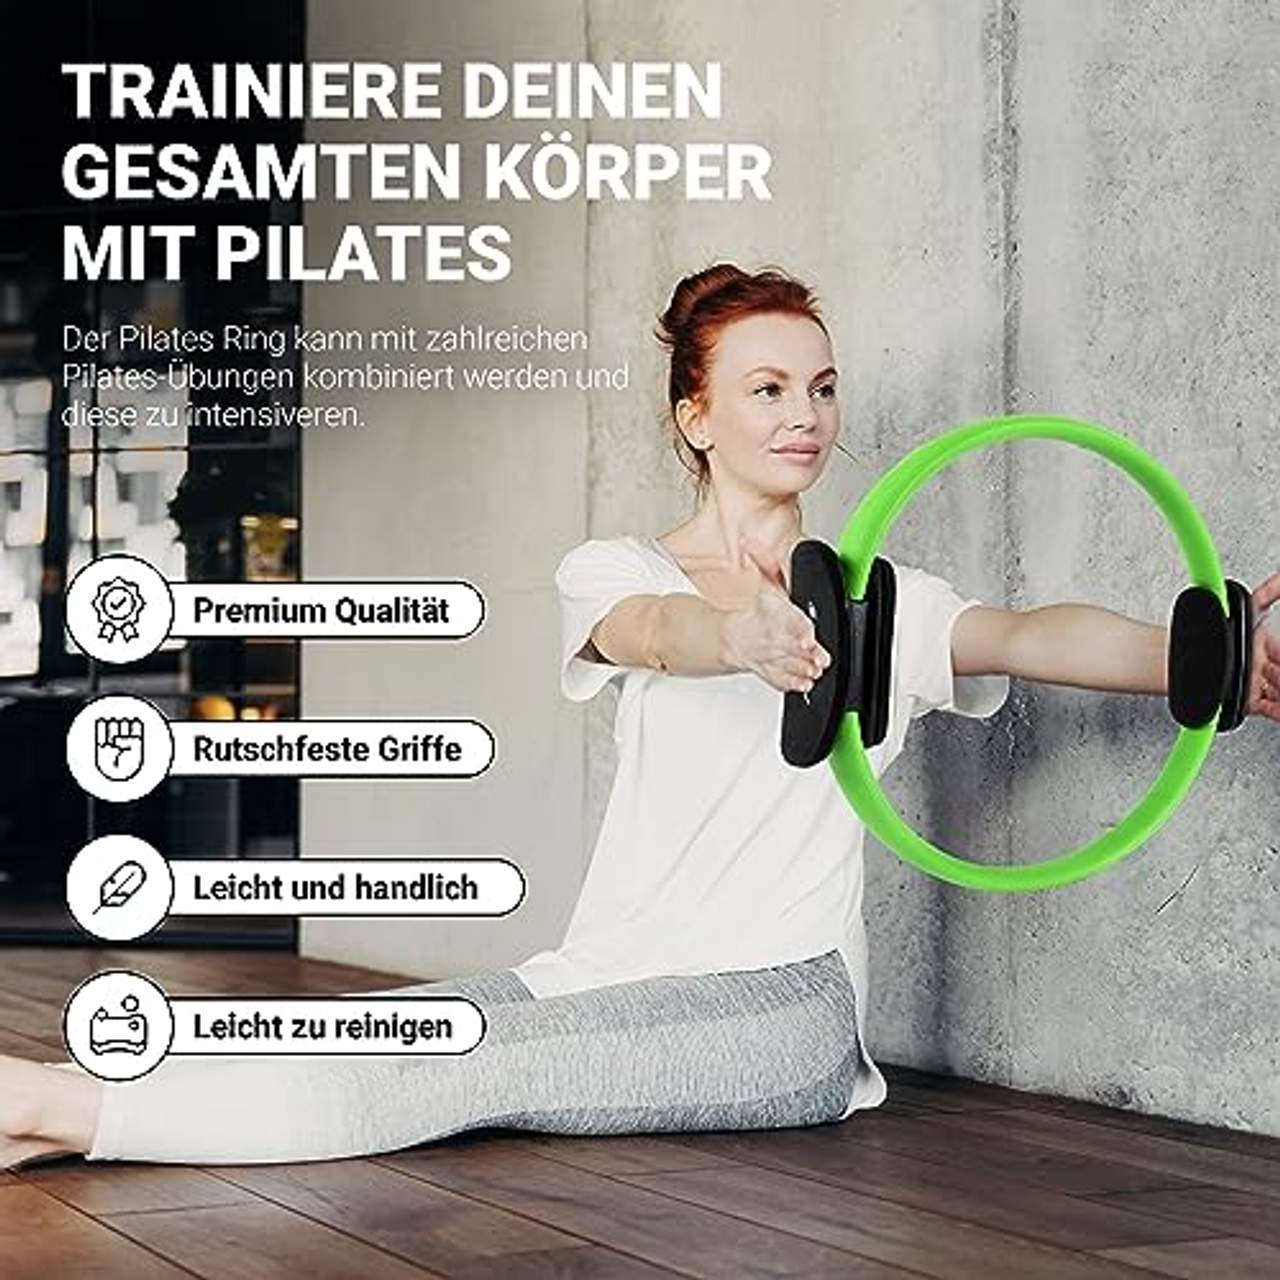 MSPORTS Pilates Ring Premium I Widerstandsring